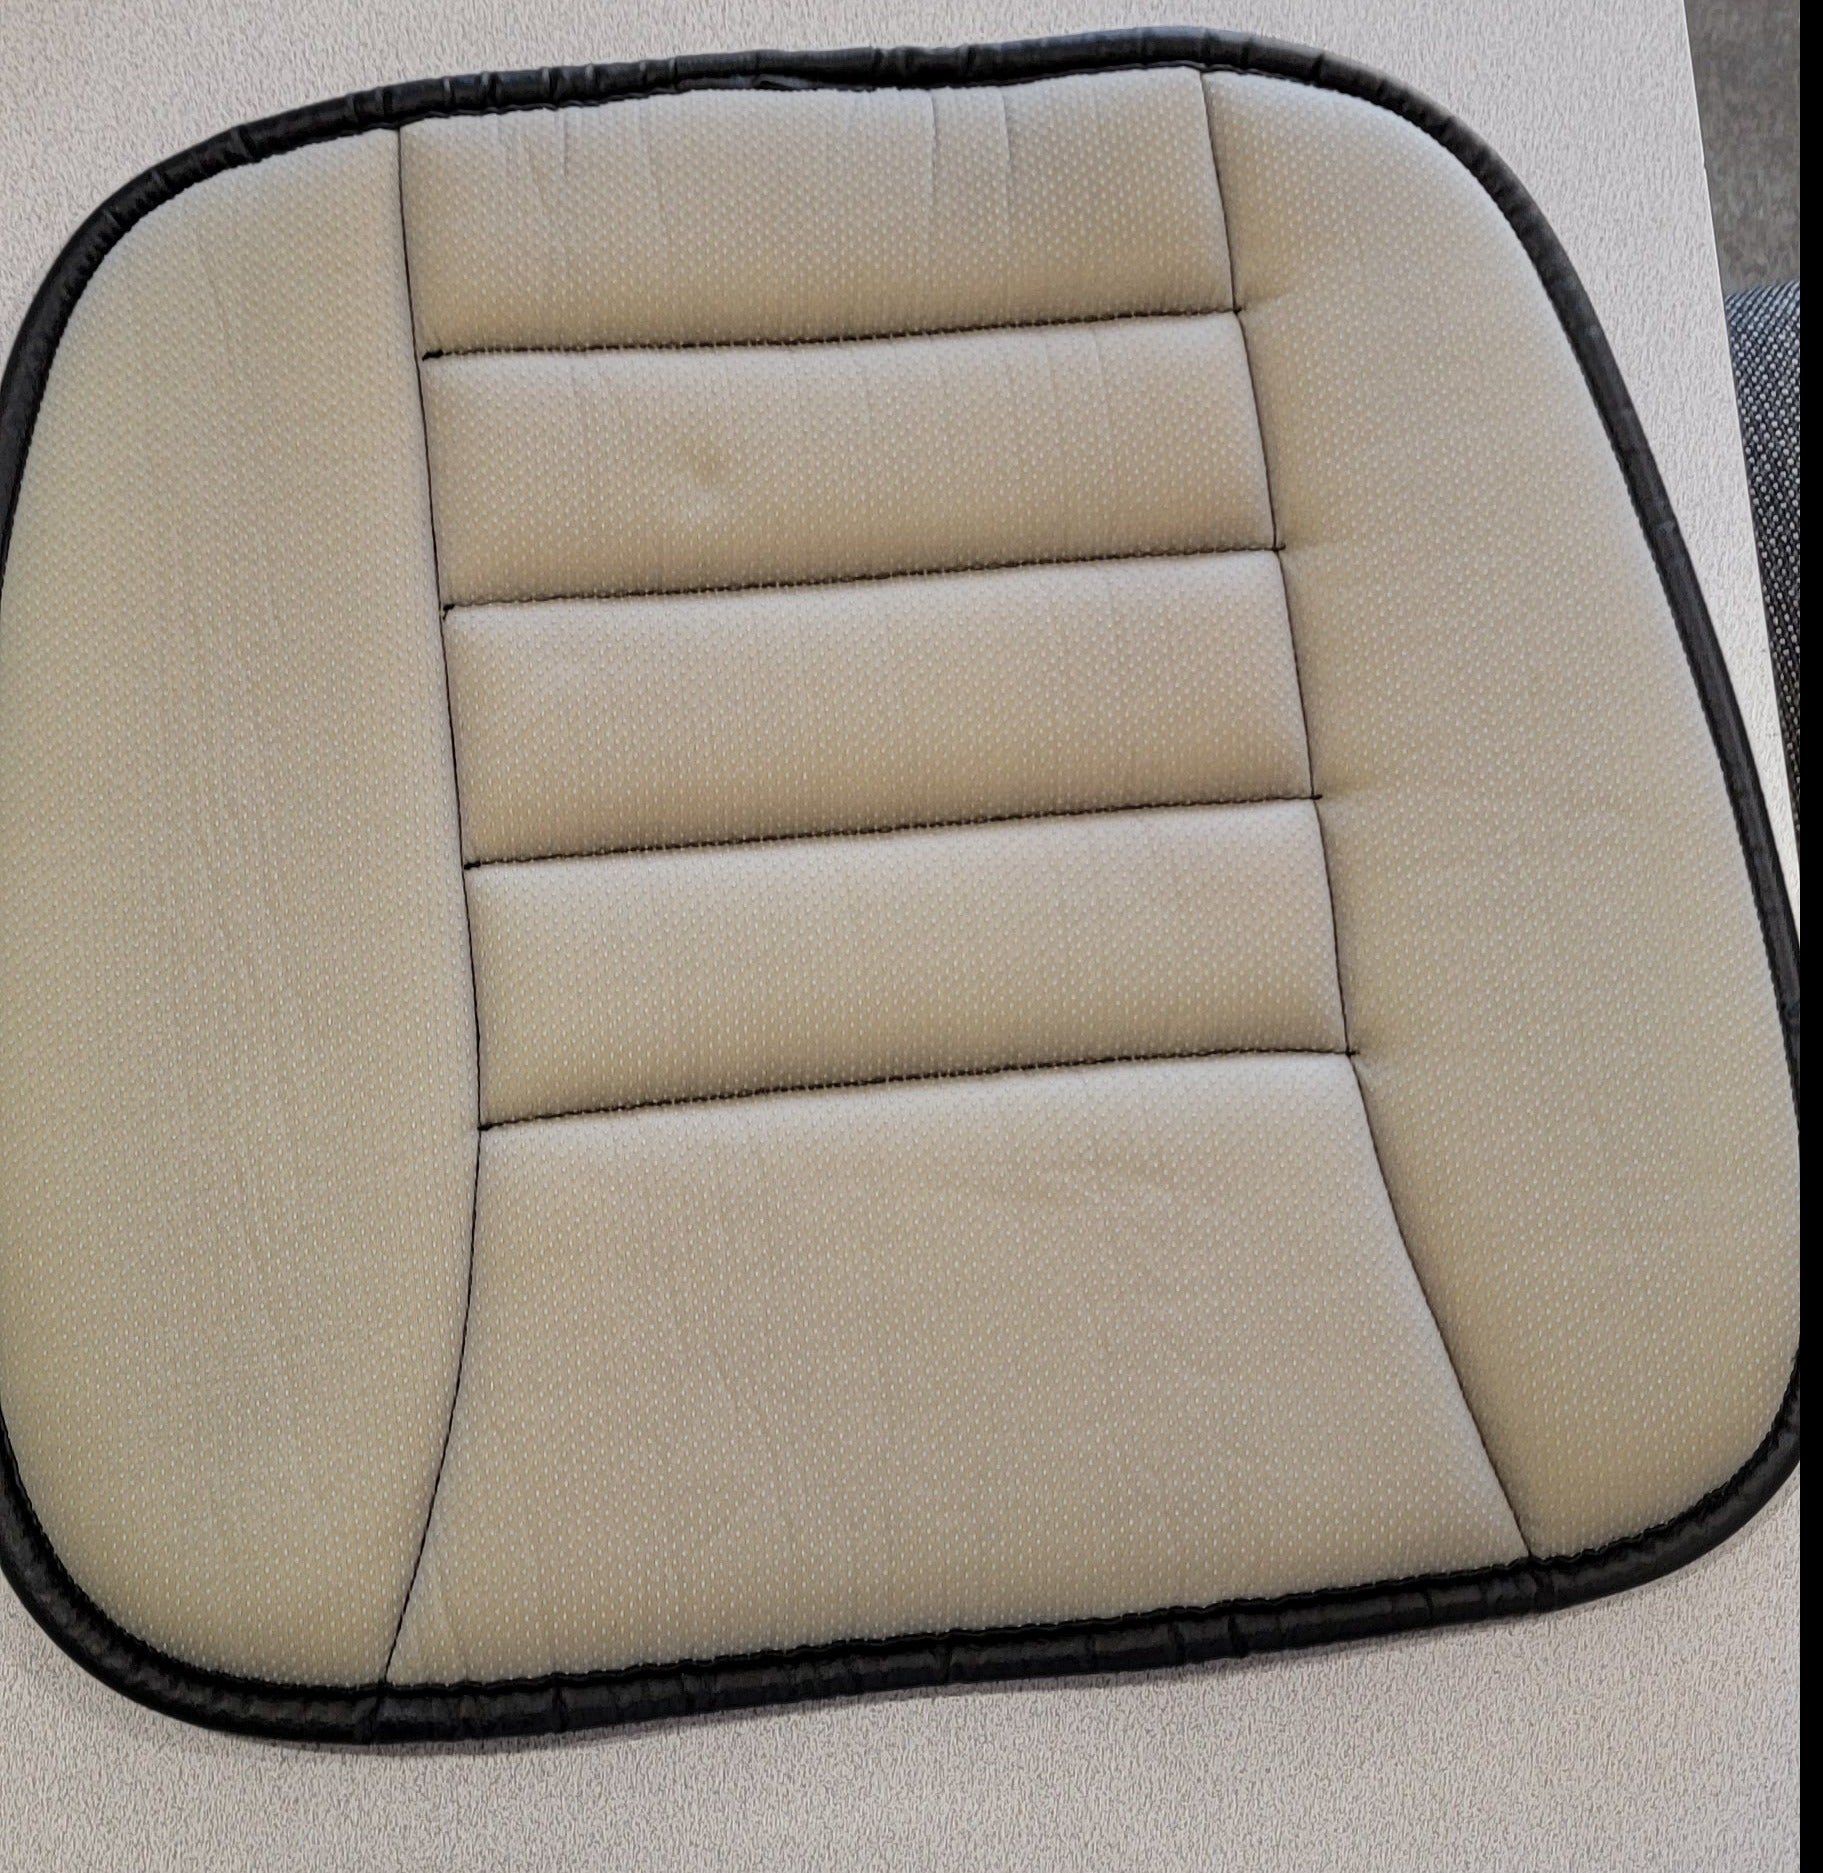 RaoRanDang car Seat cushion Pad for car Driver Seat Office chair